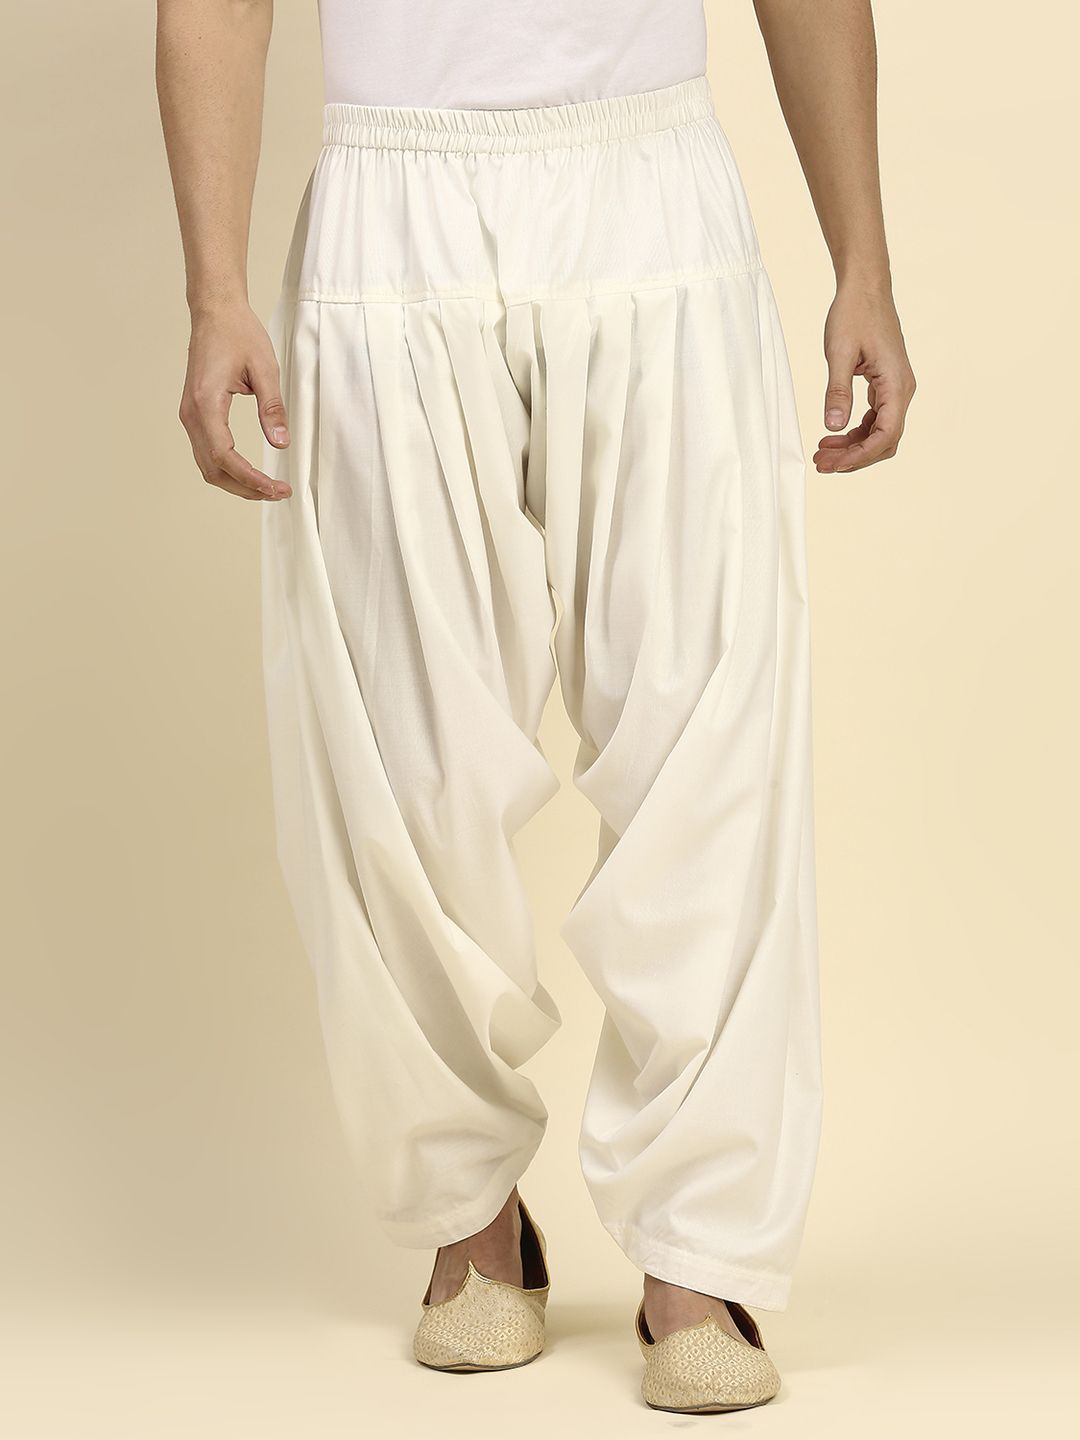 Women Cotton Patiala Salwar With Chiffon Dupatta Set Pajama Kameez Kurti  Wear | eBay